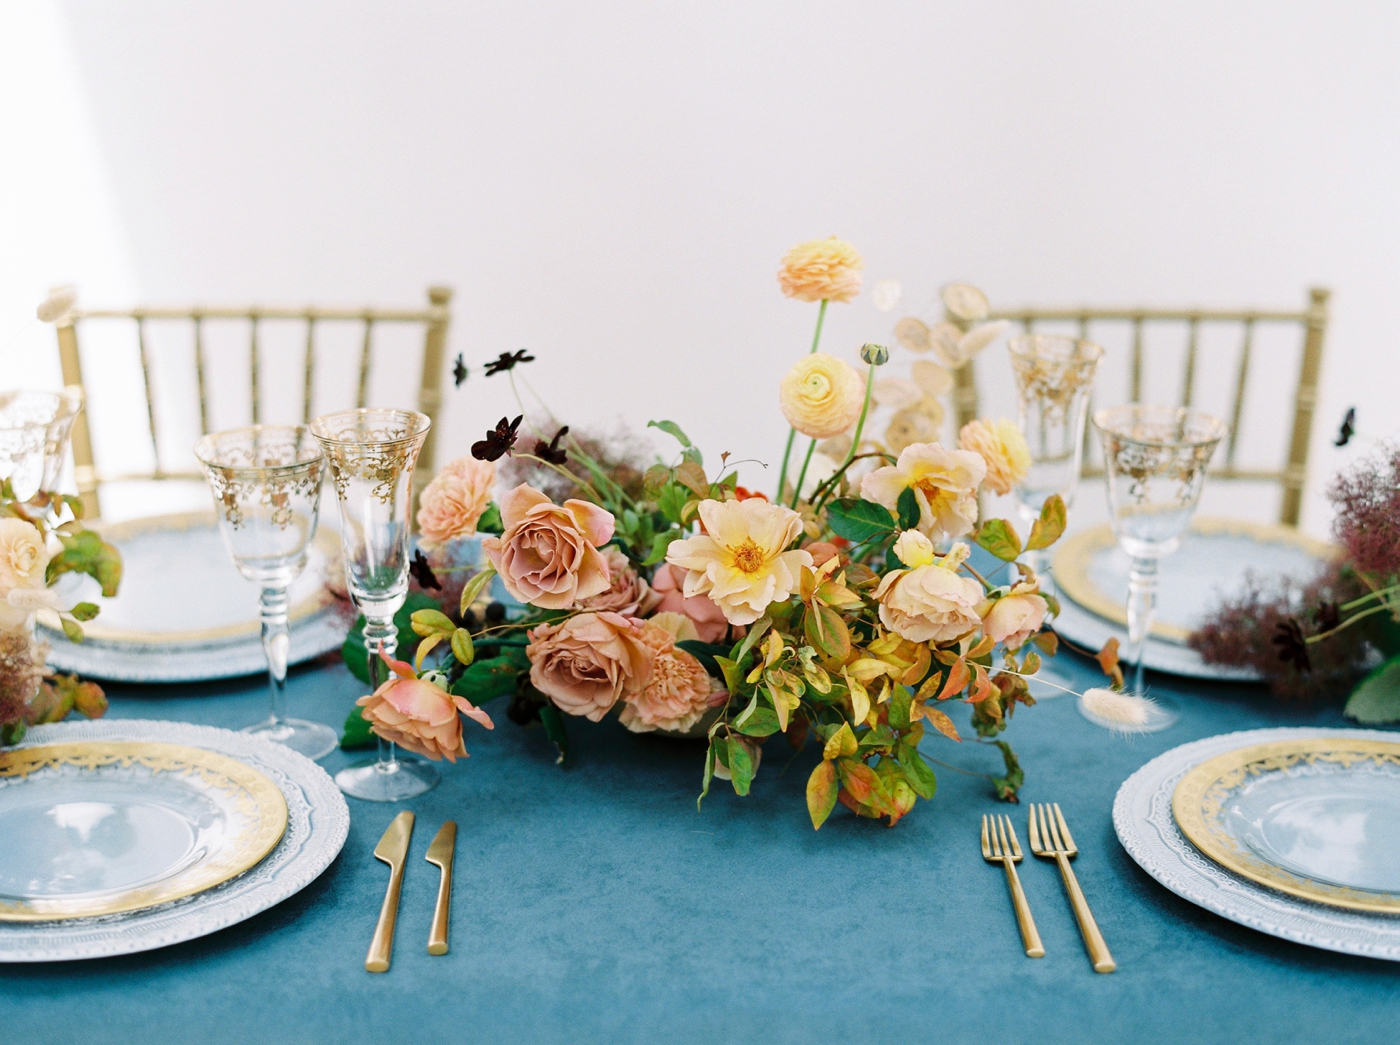 Dallas wedding photographers | wedding photography 1 on 1 workshop | fall wedding inspiration table decor | Justine milton film photographer